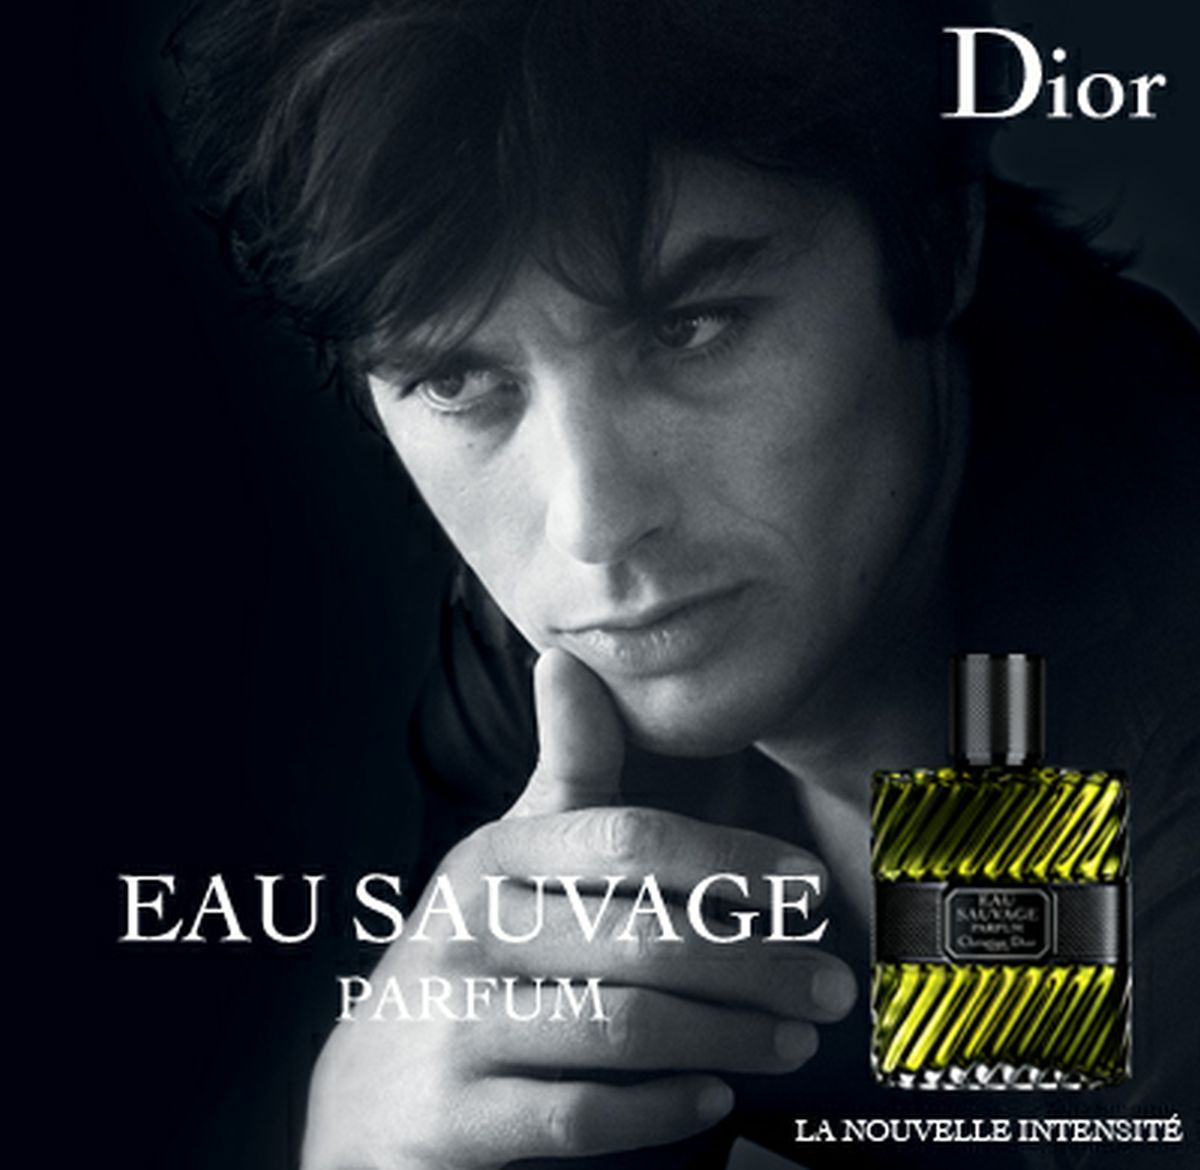 christian dior eau sauvage parfum  for men alein delon reklam afişi.jpg